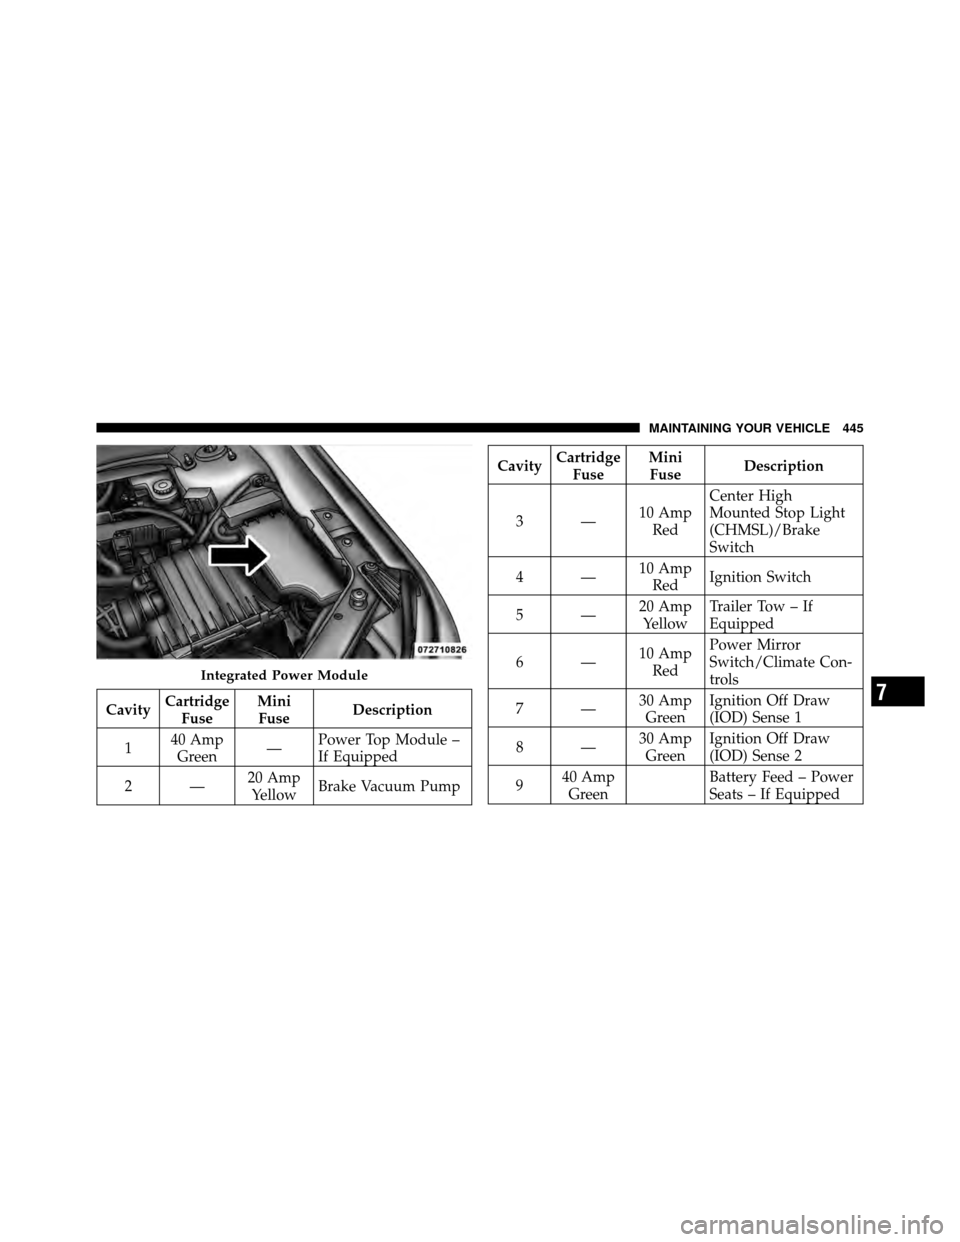 CHRYSLER 200 2012 1.G Owners Manual CavityCartridge
Fuse Mini
Fuse Description
1 40 Amp
Green —Power Top Module –
If Equipped
2— 20 Amp
Yellow Brake Vacuum Pump
CavityCartridge
Fuse Mini
Fuse Description
3— 10 Amp
Red Center Hig